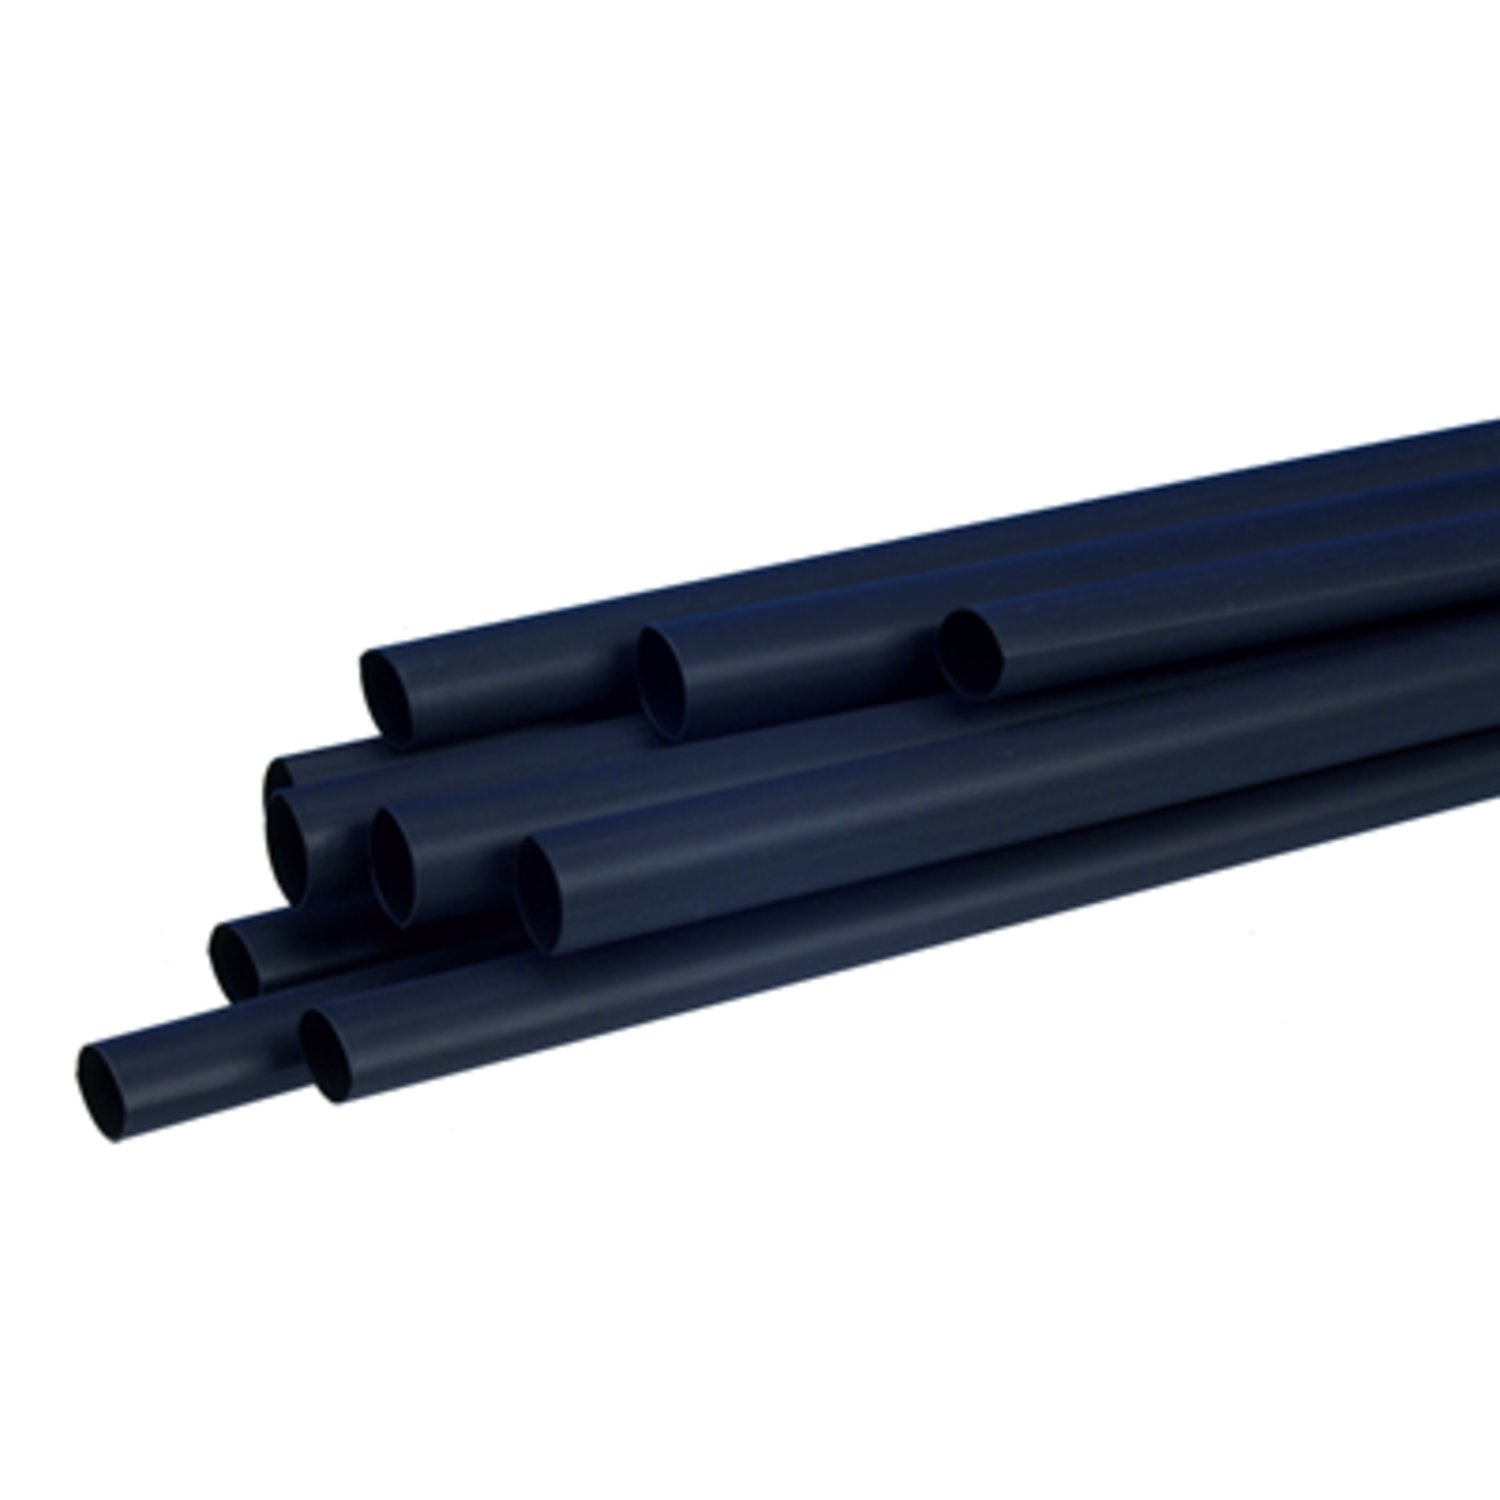 7100025272 - 3M SFTW-203 1 1/2" Heat Shrink Tubing Polyolefin, Black, 39.0/12.7 mm,
1.22 m Piece